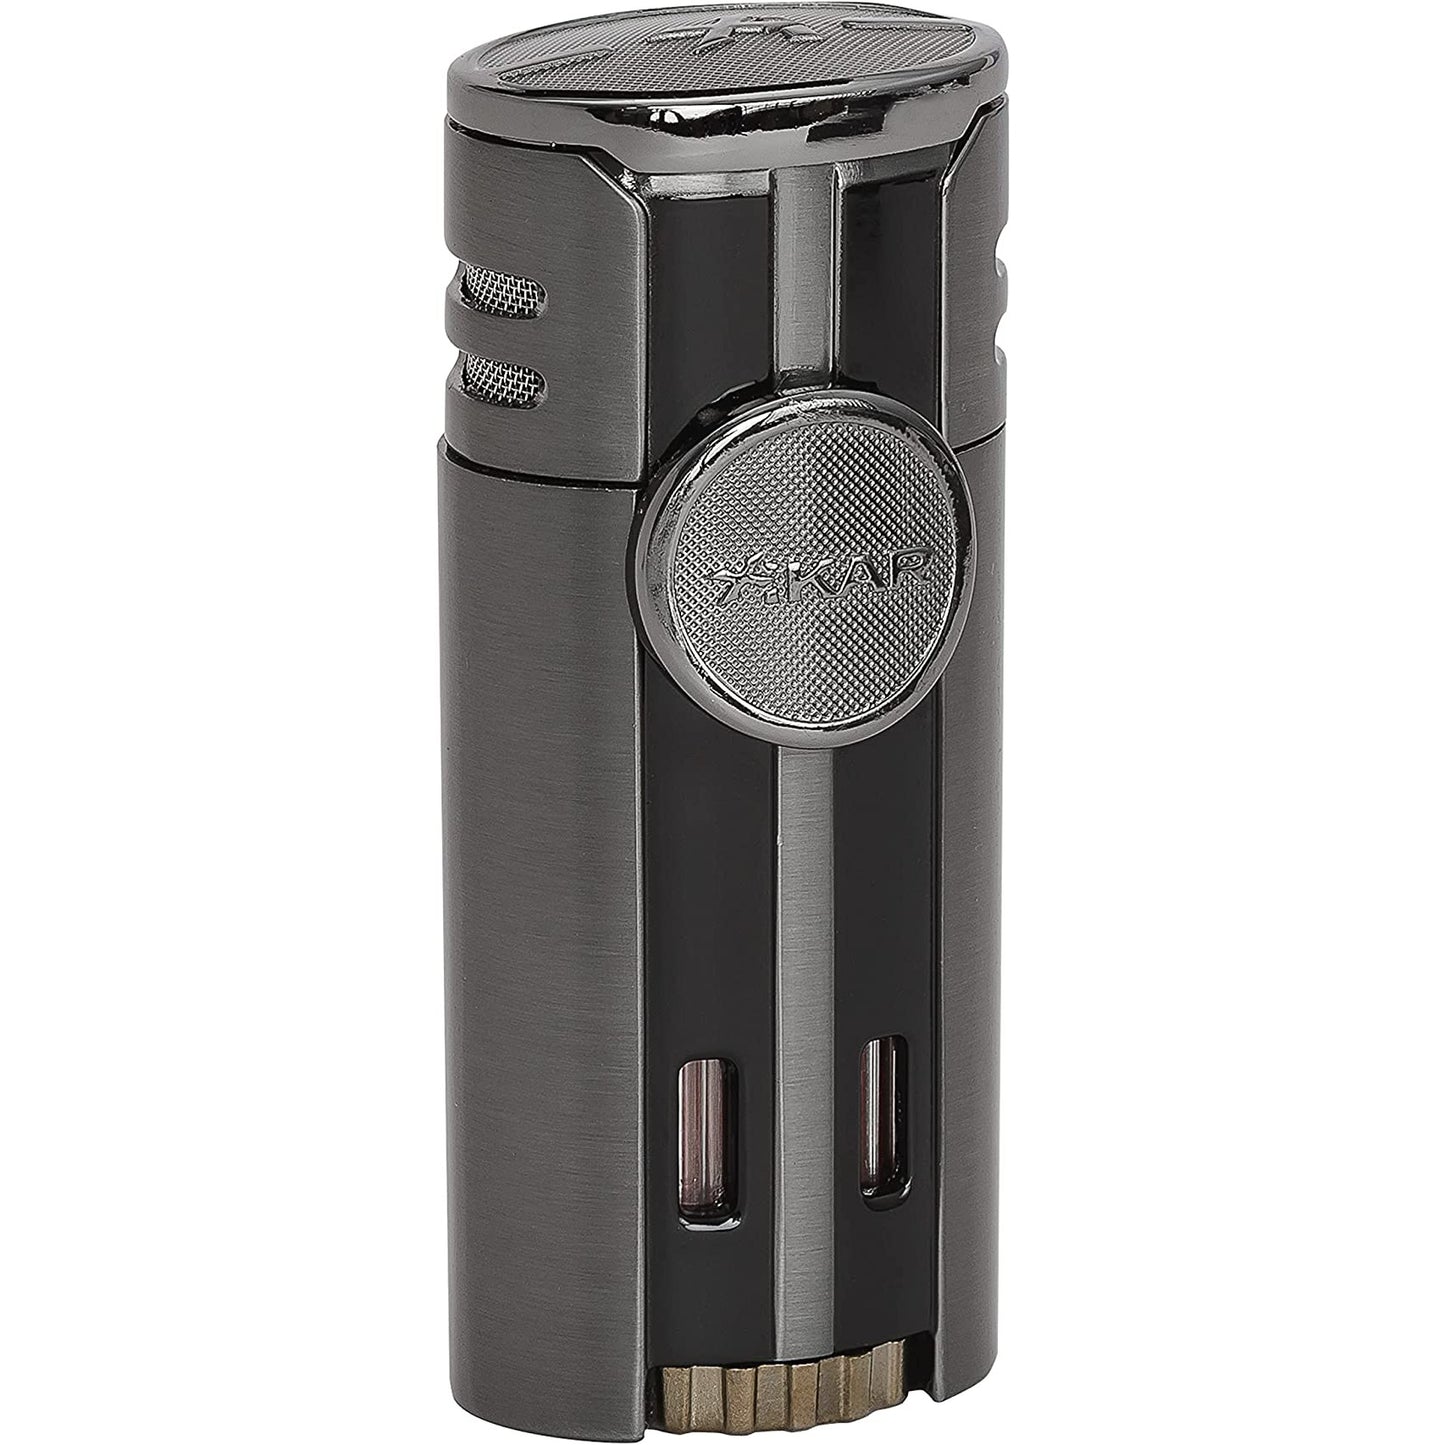 Xikar HP4 Lighter | Quad Jet Flame